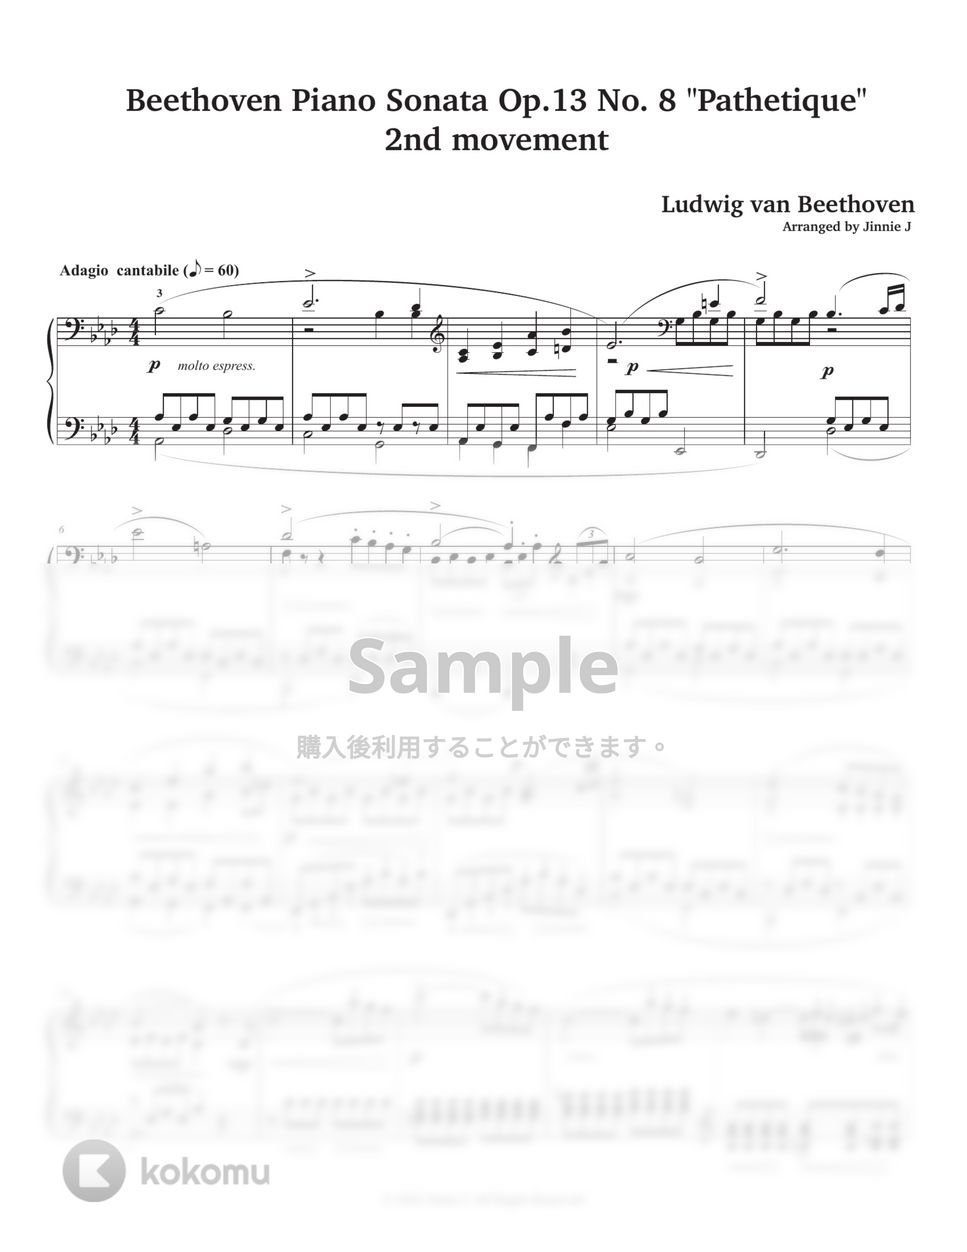 Jinnie　by　Movement)　Op.　Beethoven　(2nd　Piano　楽譜　No.　Sonata　13　J　“Pathetique”　(中級レベル)